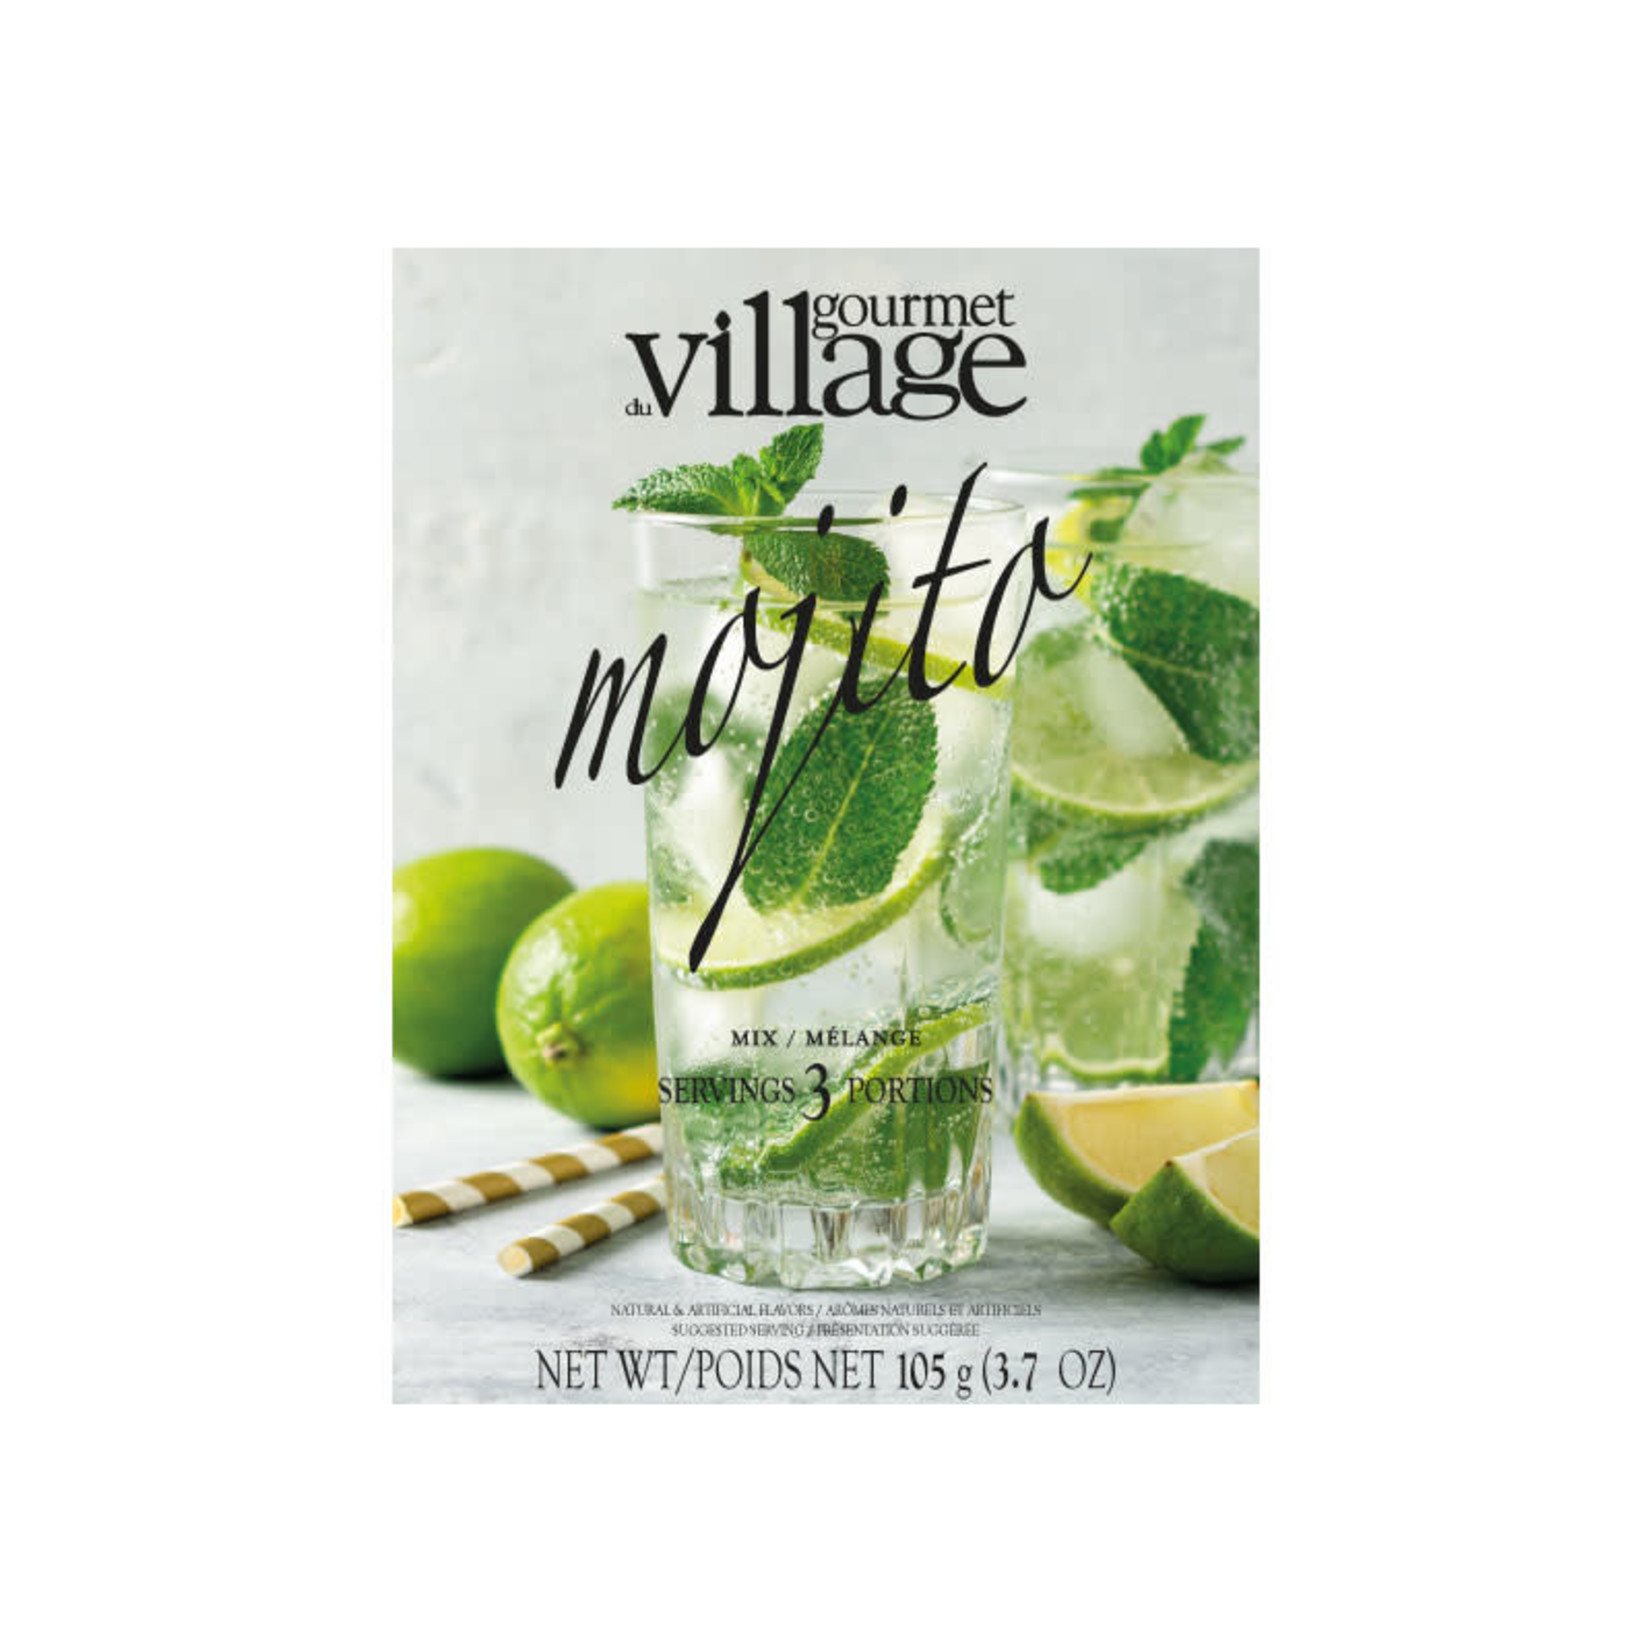 Gourmet du Village Mojito Lime